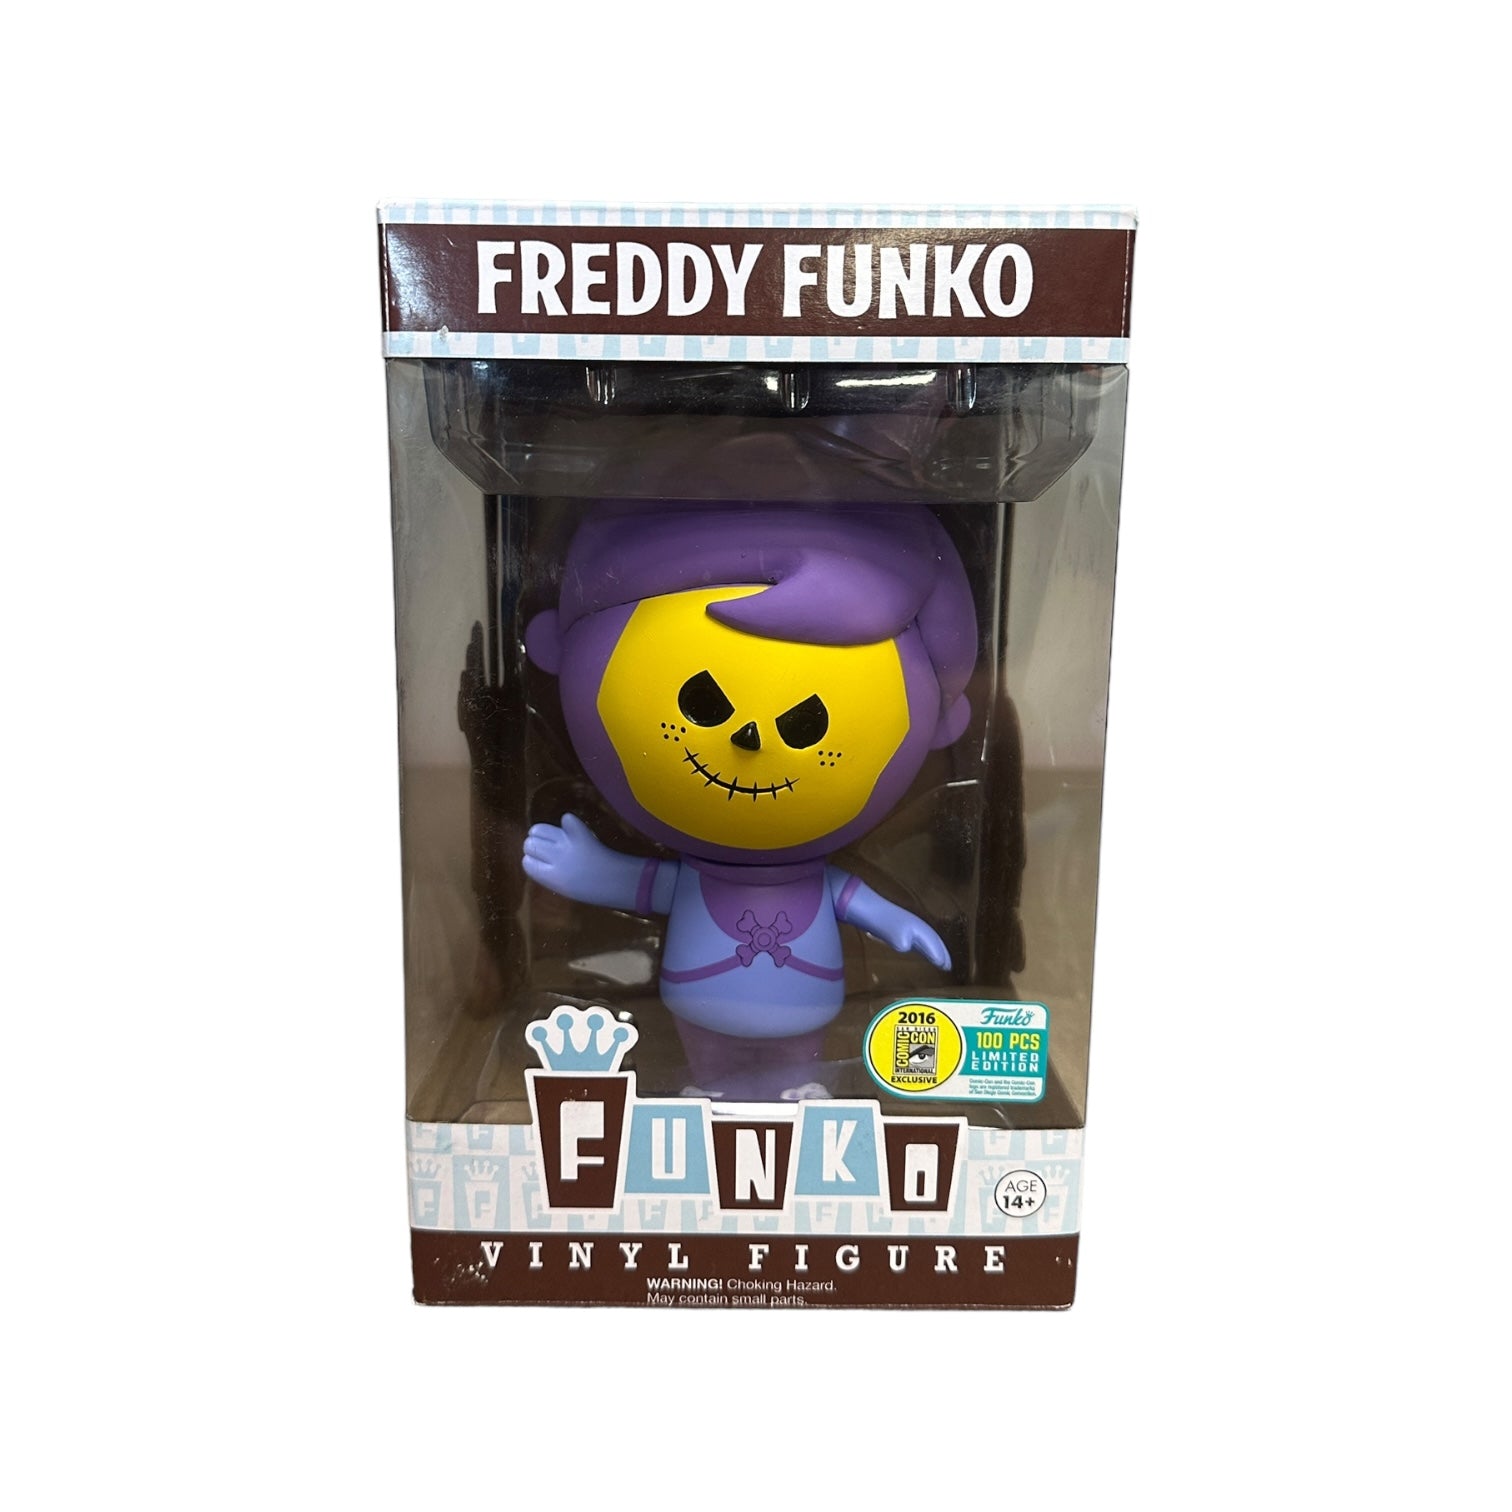 Freddy Funko as Skeletor Retro Vinyl Figure! - Masters Of The Universe - SDCC 2016 Exclusive LE100 Pcs - Condition 7.5/10